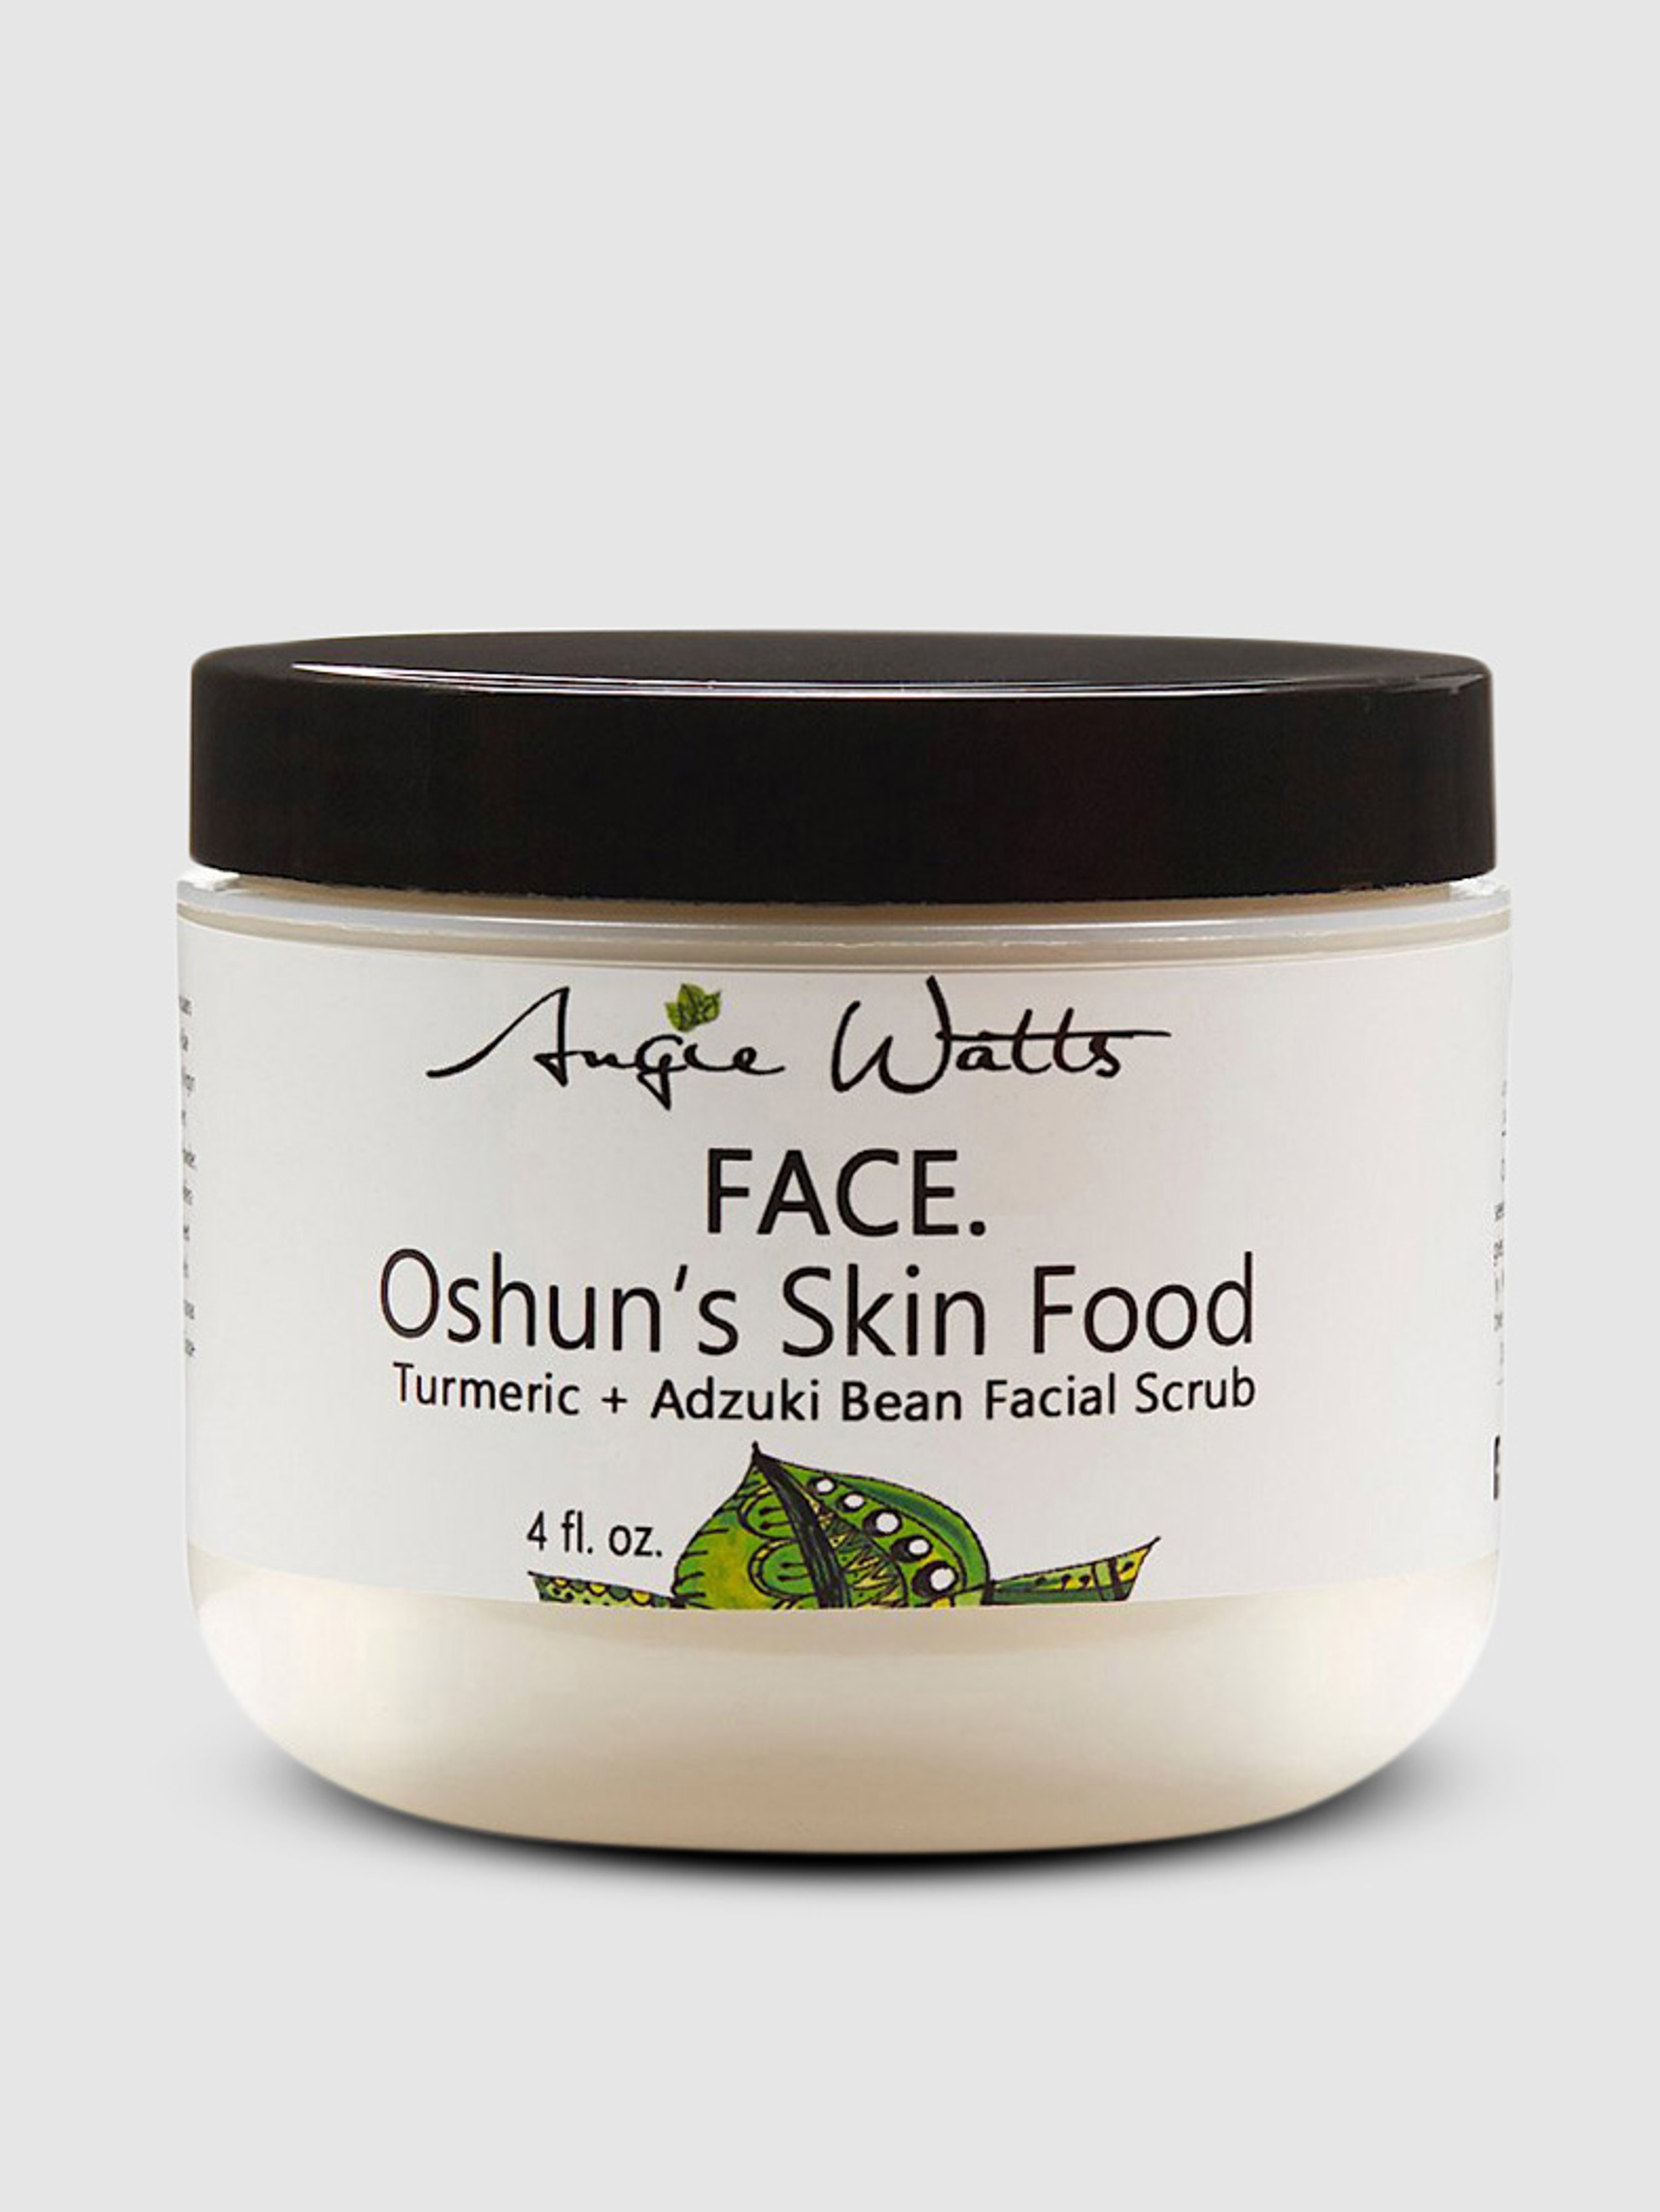 Angie Watts Face. Oshun's Skin Food, Turmeric + Adzuki Bean Scrub